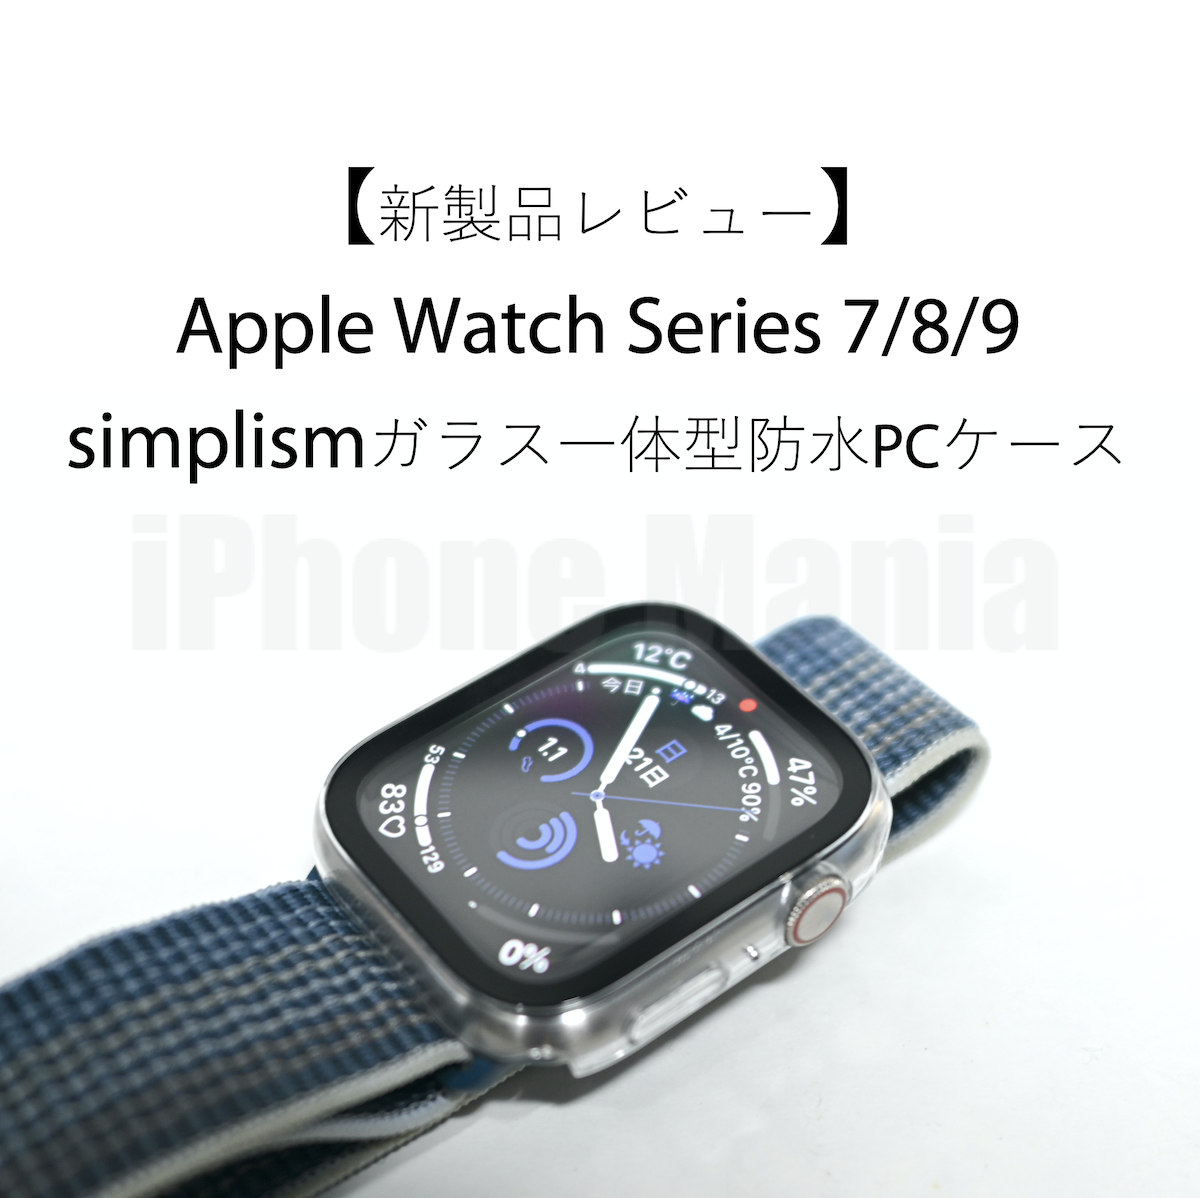 SimplismのApple Watch用ガラス一体型ケース新製品3種類をレビュー